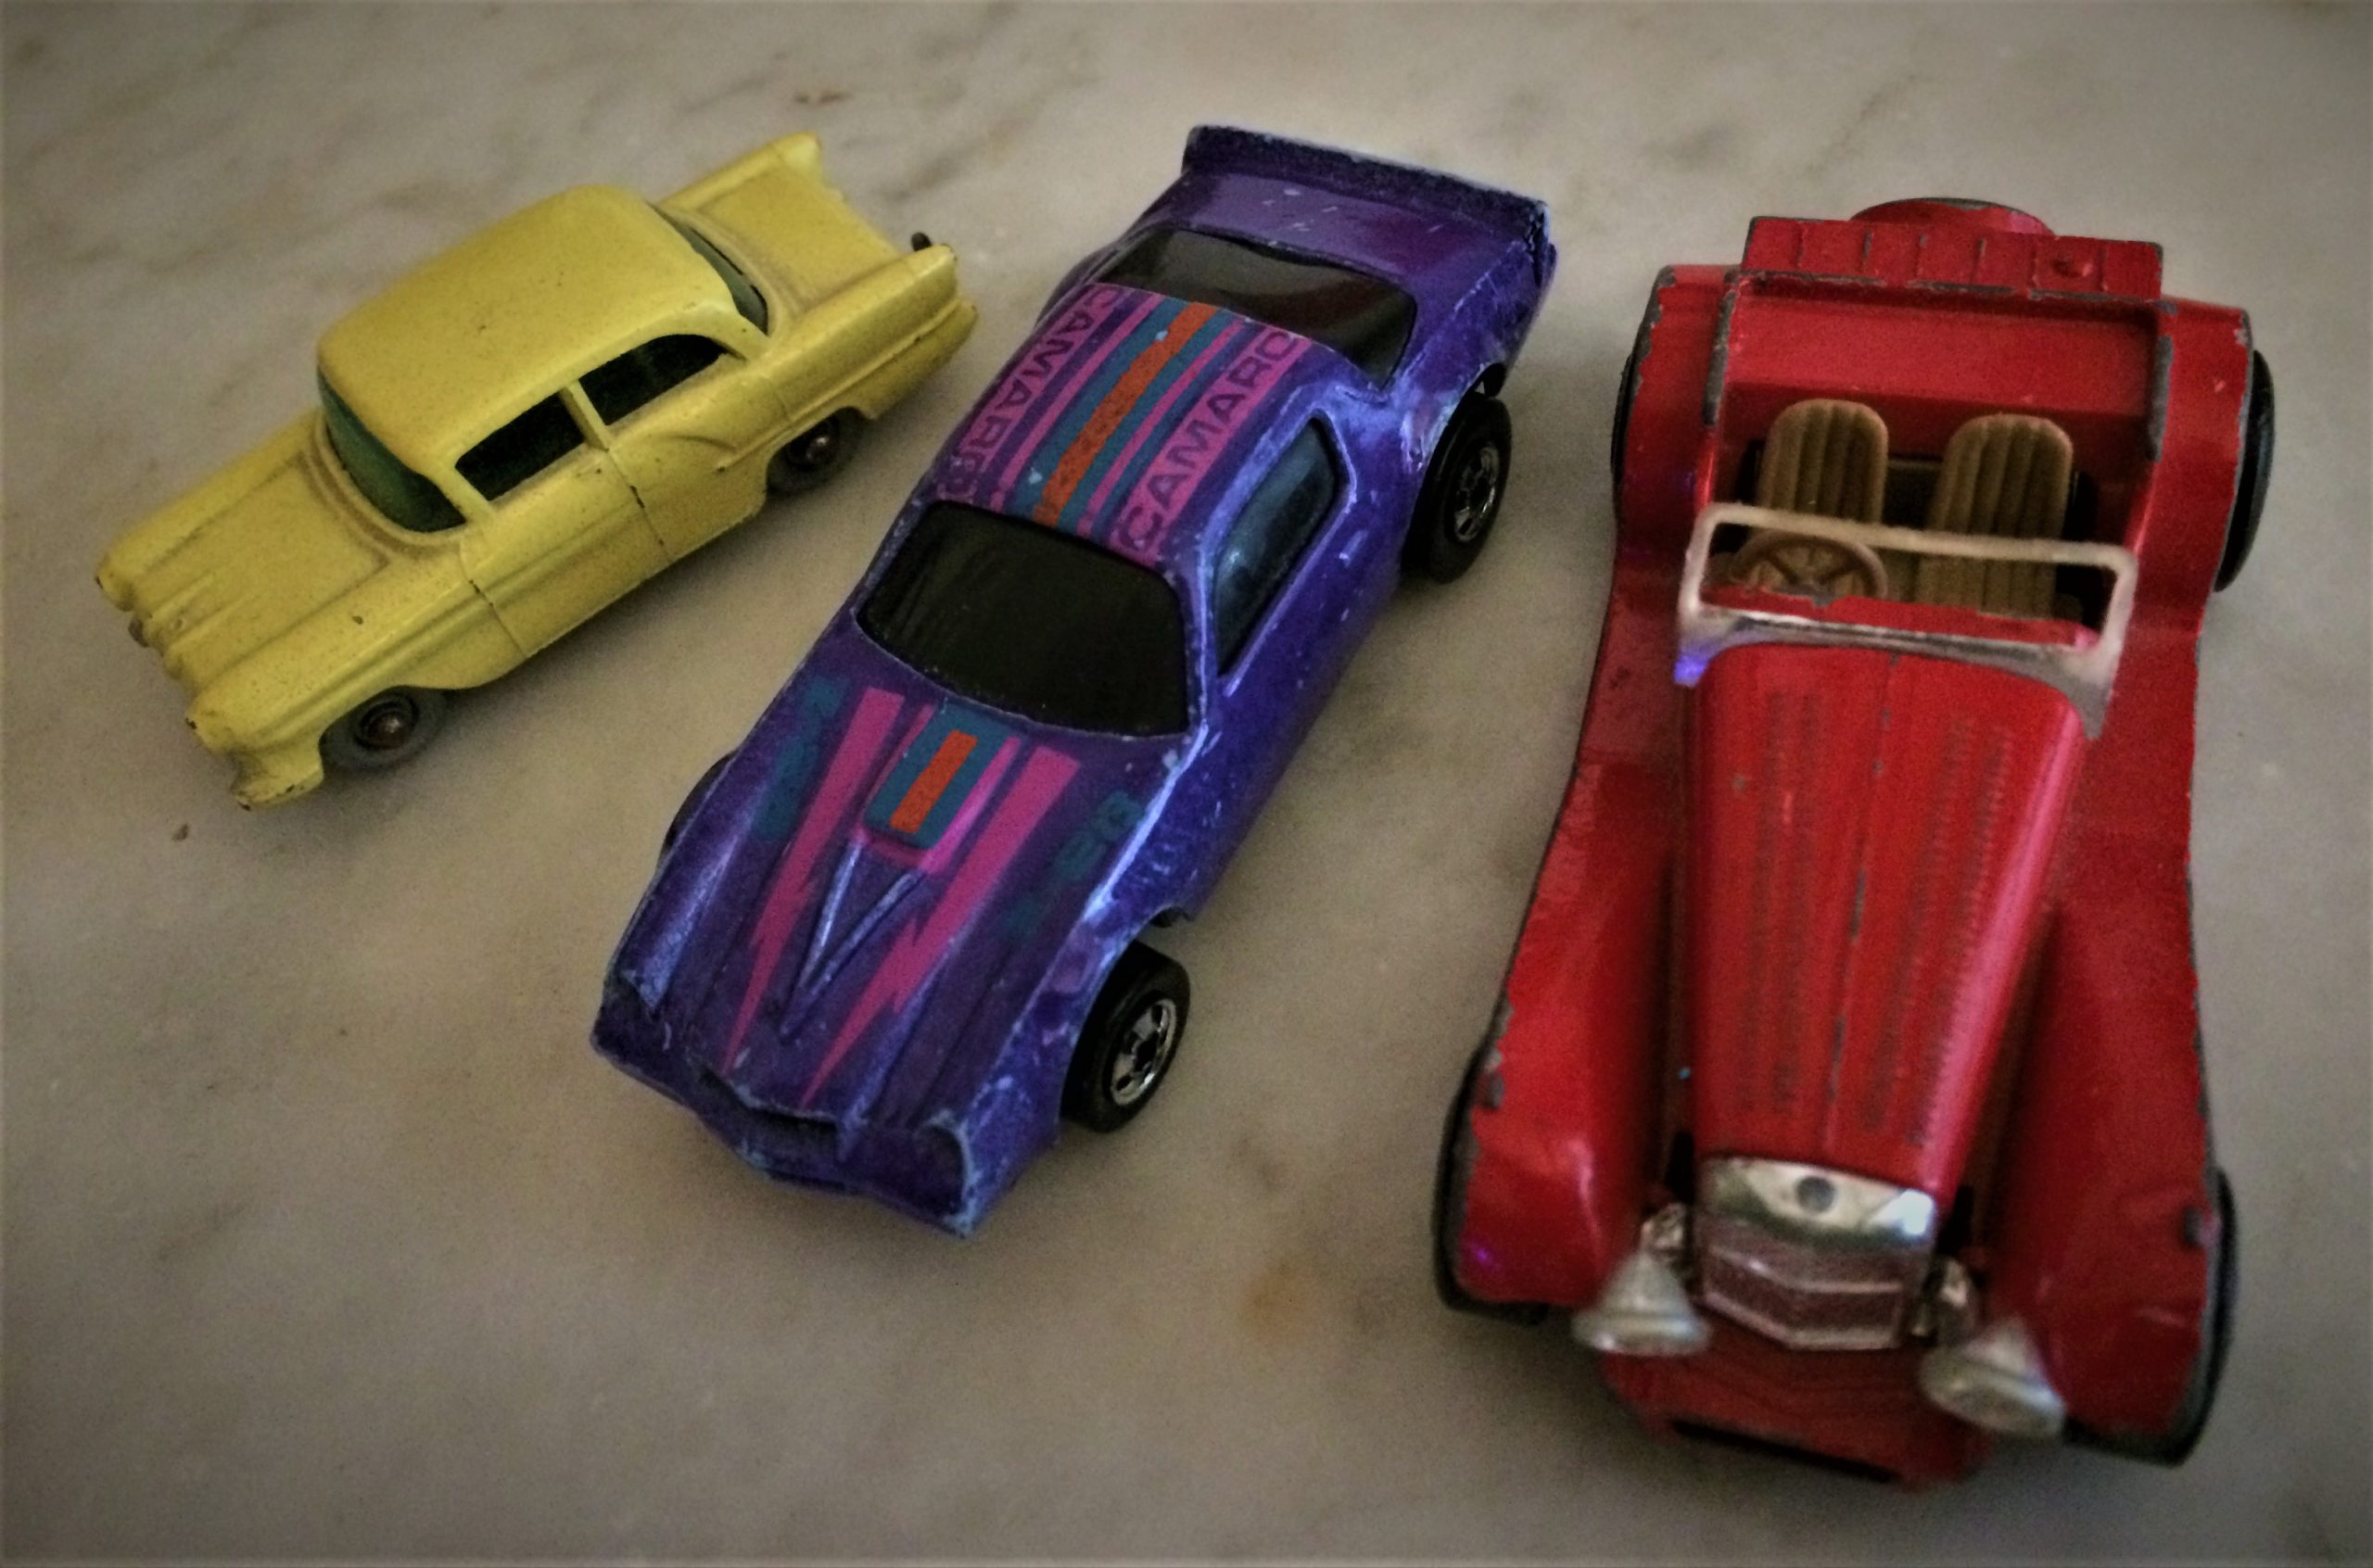 Toy Car/Real Car] Mine grew two extra doors! : r/HotWheels